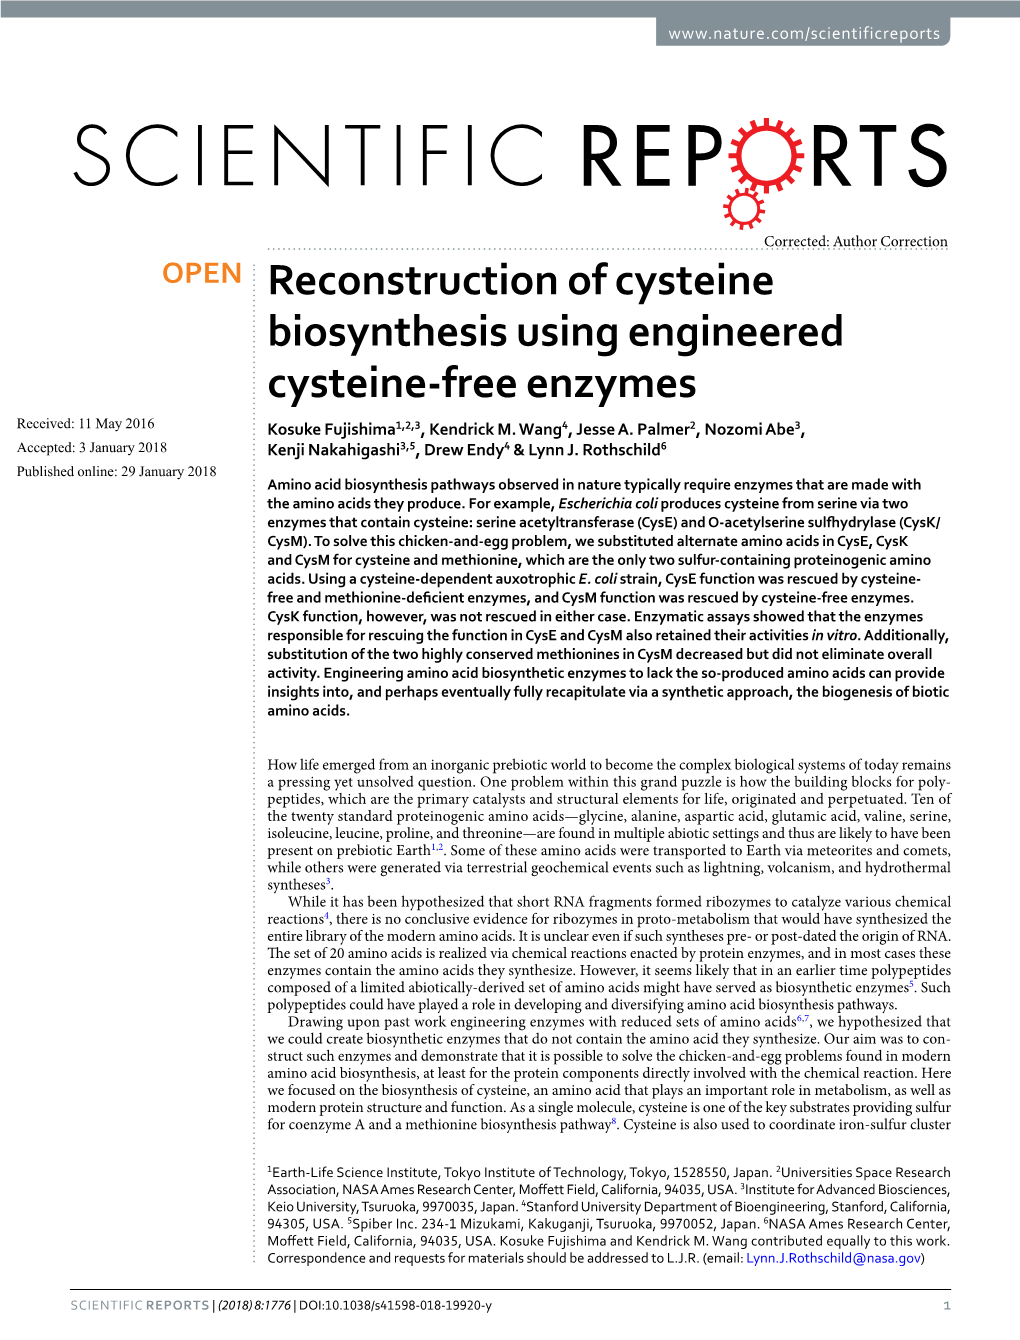 Reconstruction of Cysteine Biosynthesis Using Engineered Cysteine-Free Enzymes Received: 11 May 2016 Kosuke Fujishima1,2,3, Kendrick M